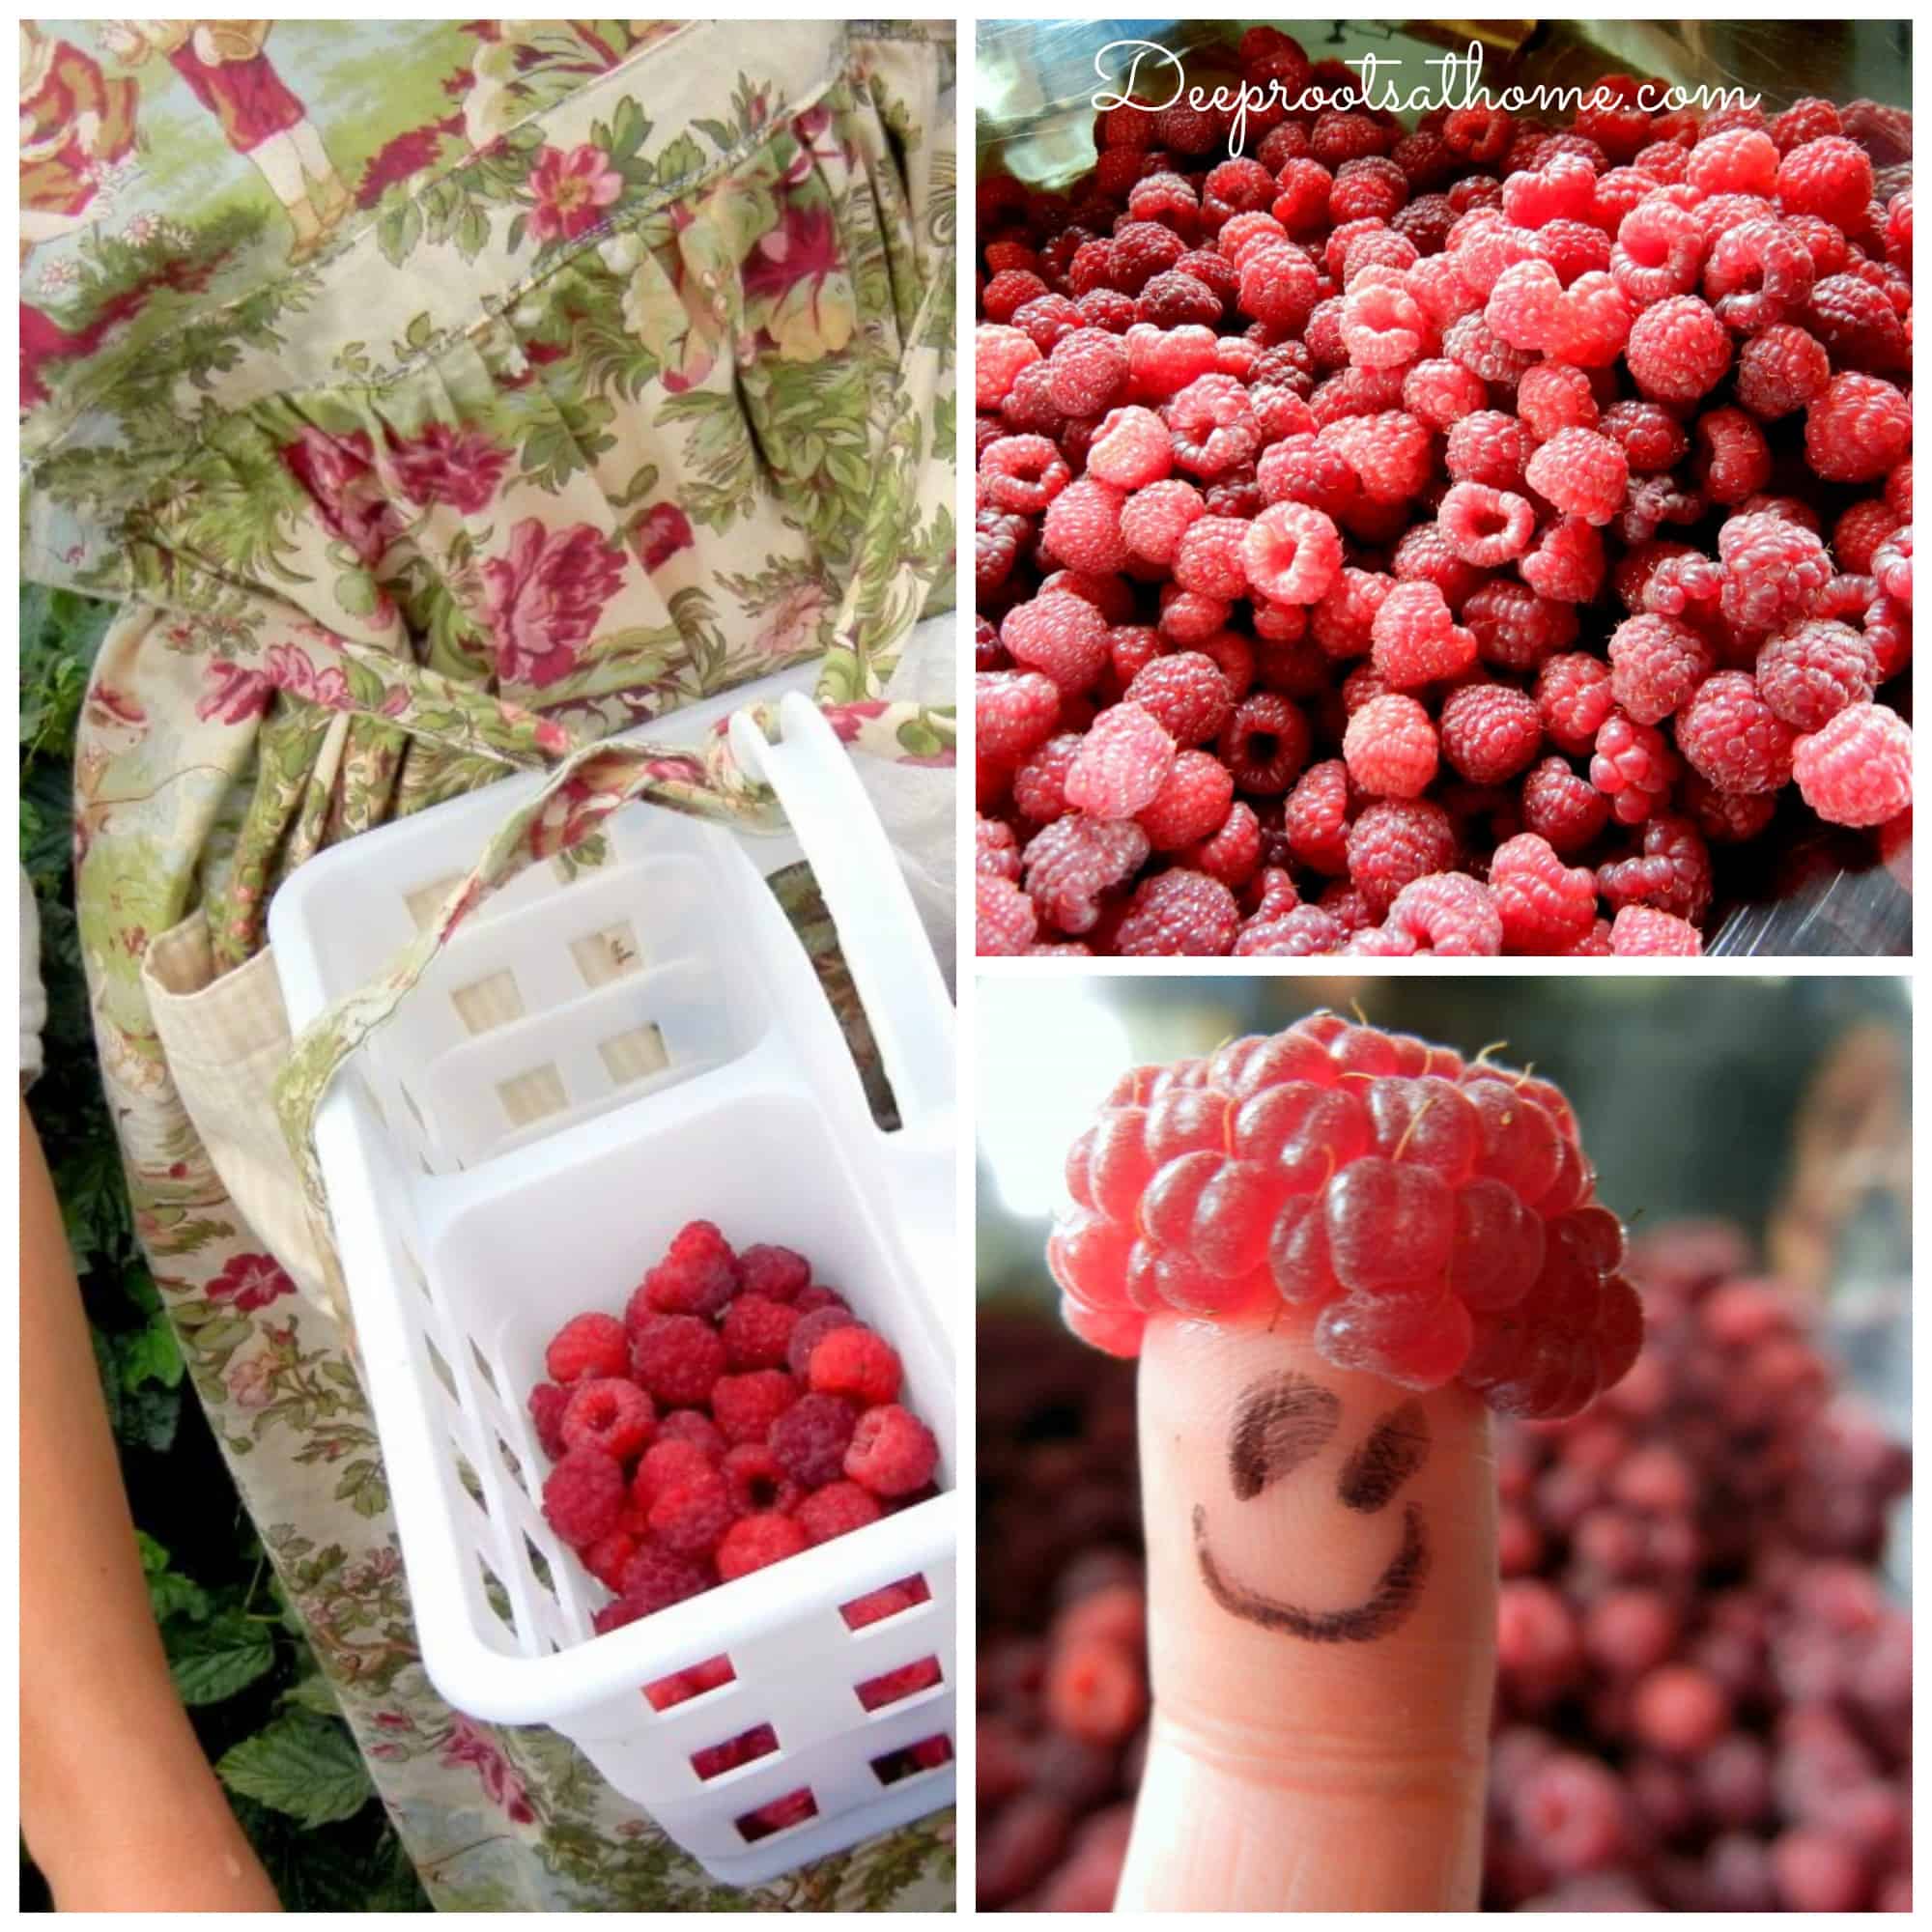 Three Ingredient Summertime Raspberry Sorbet, a collage of raspberries and picking raspberries